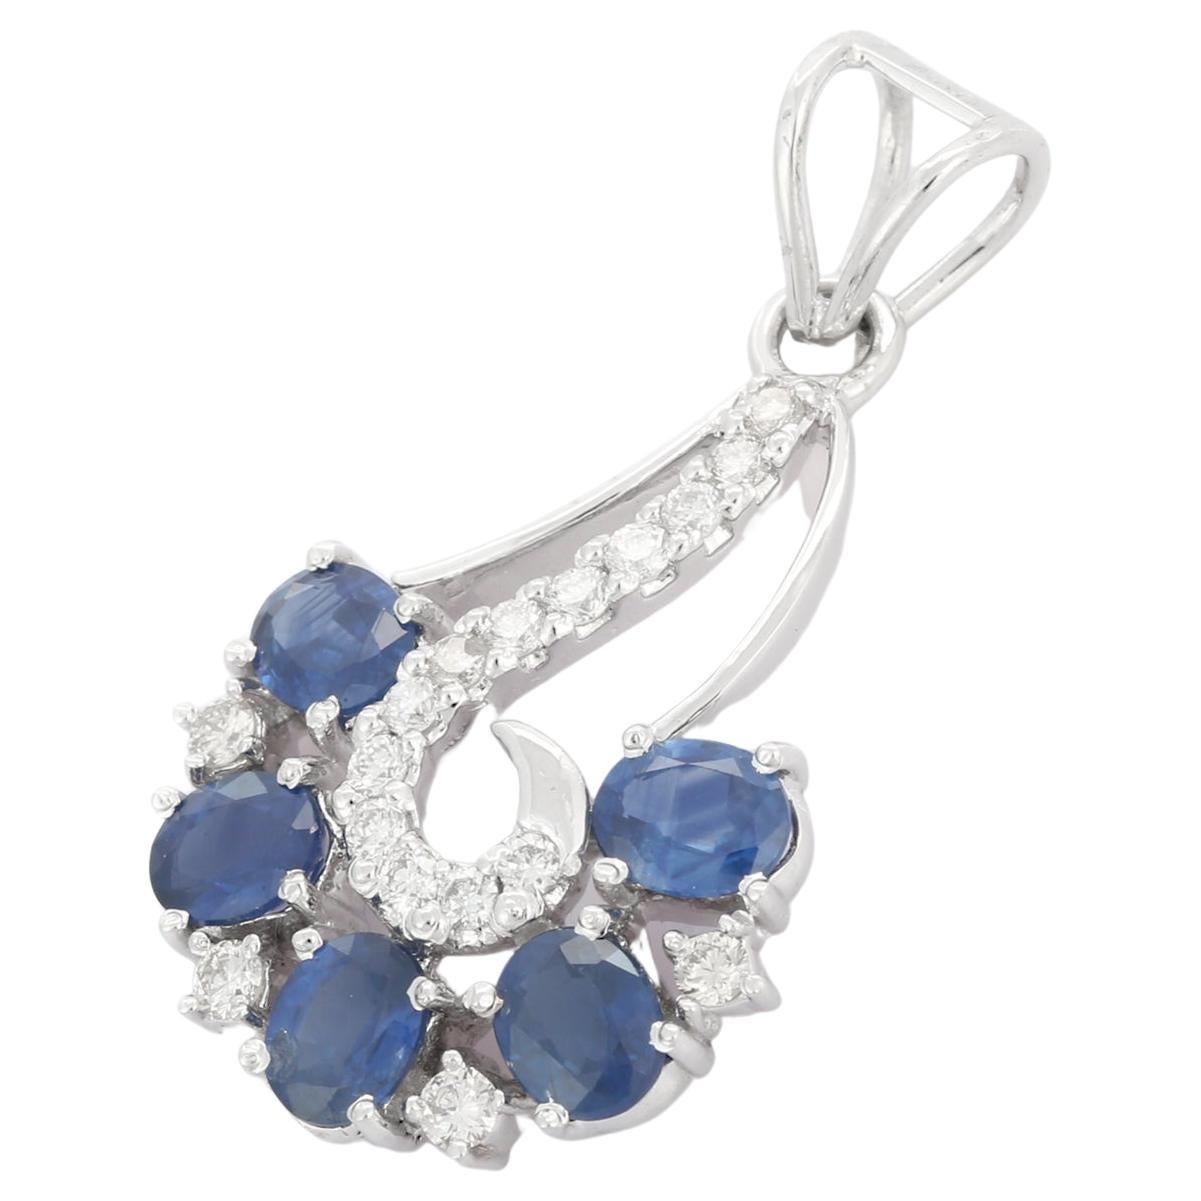 Art Nouveau 2.42 ct Blue Sapphire Diamond Pendant in 18K White Gold